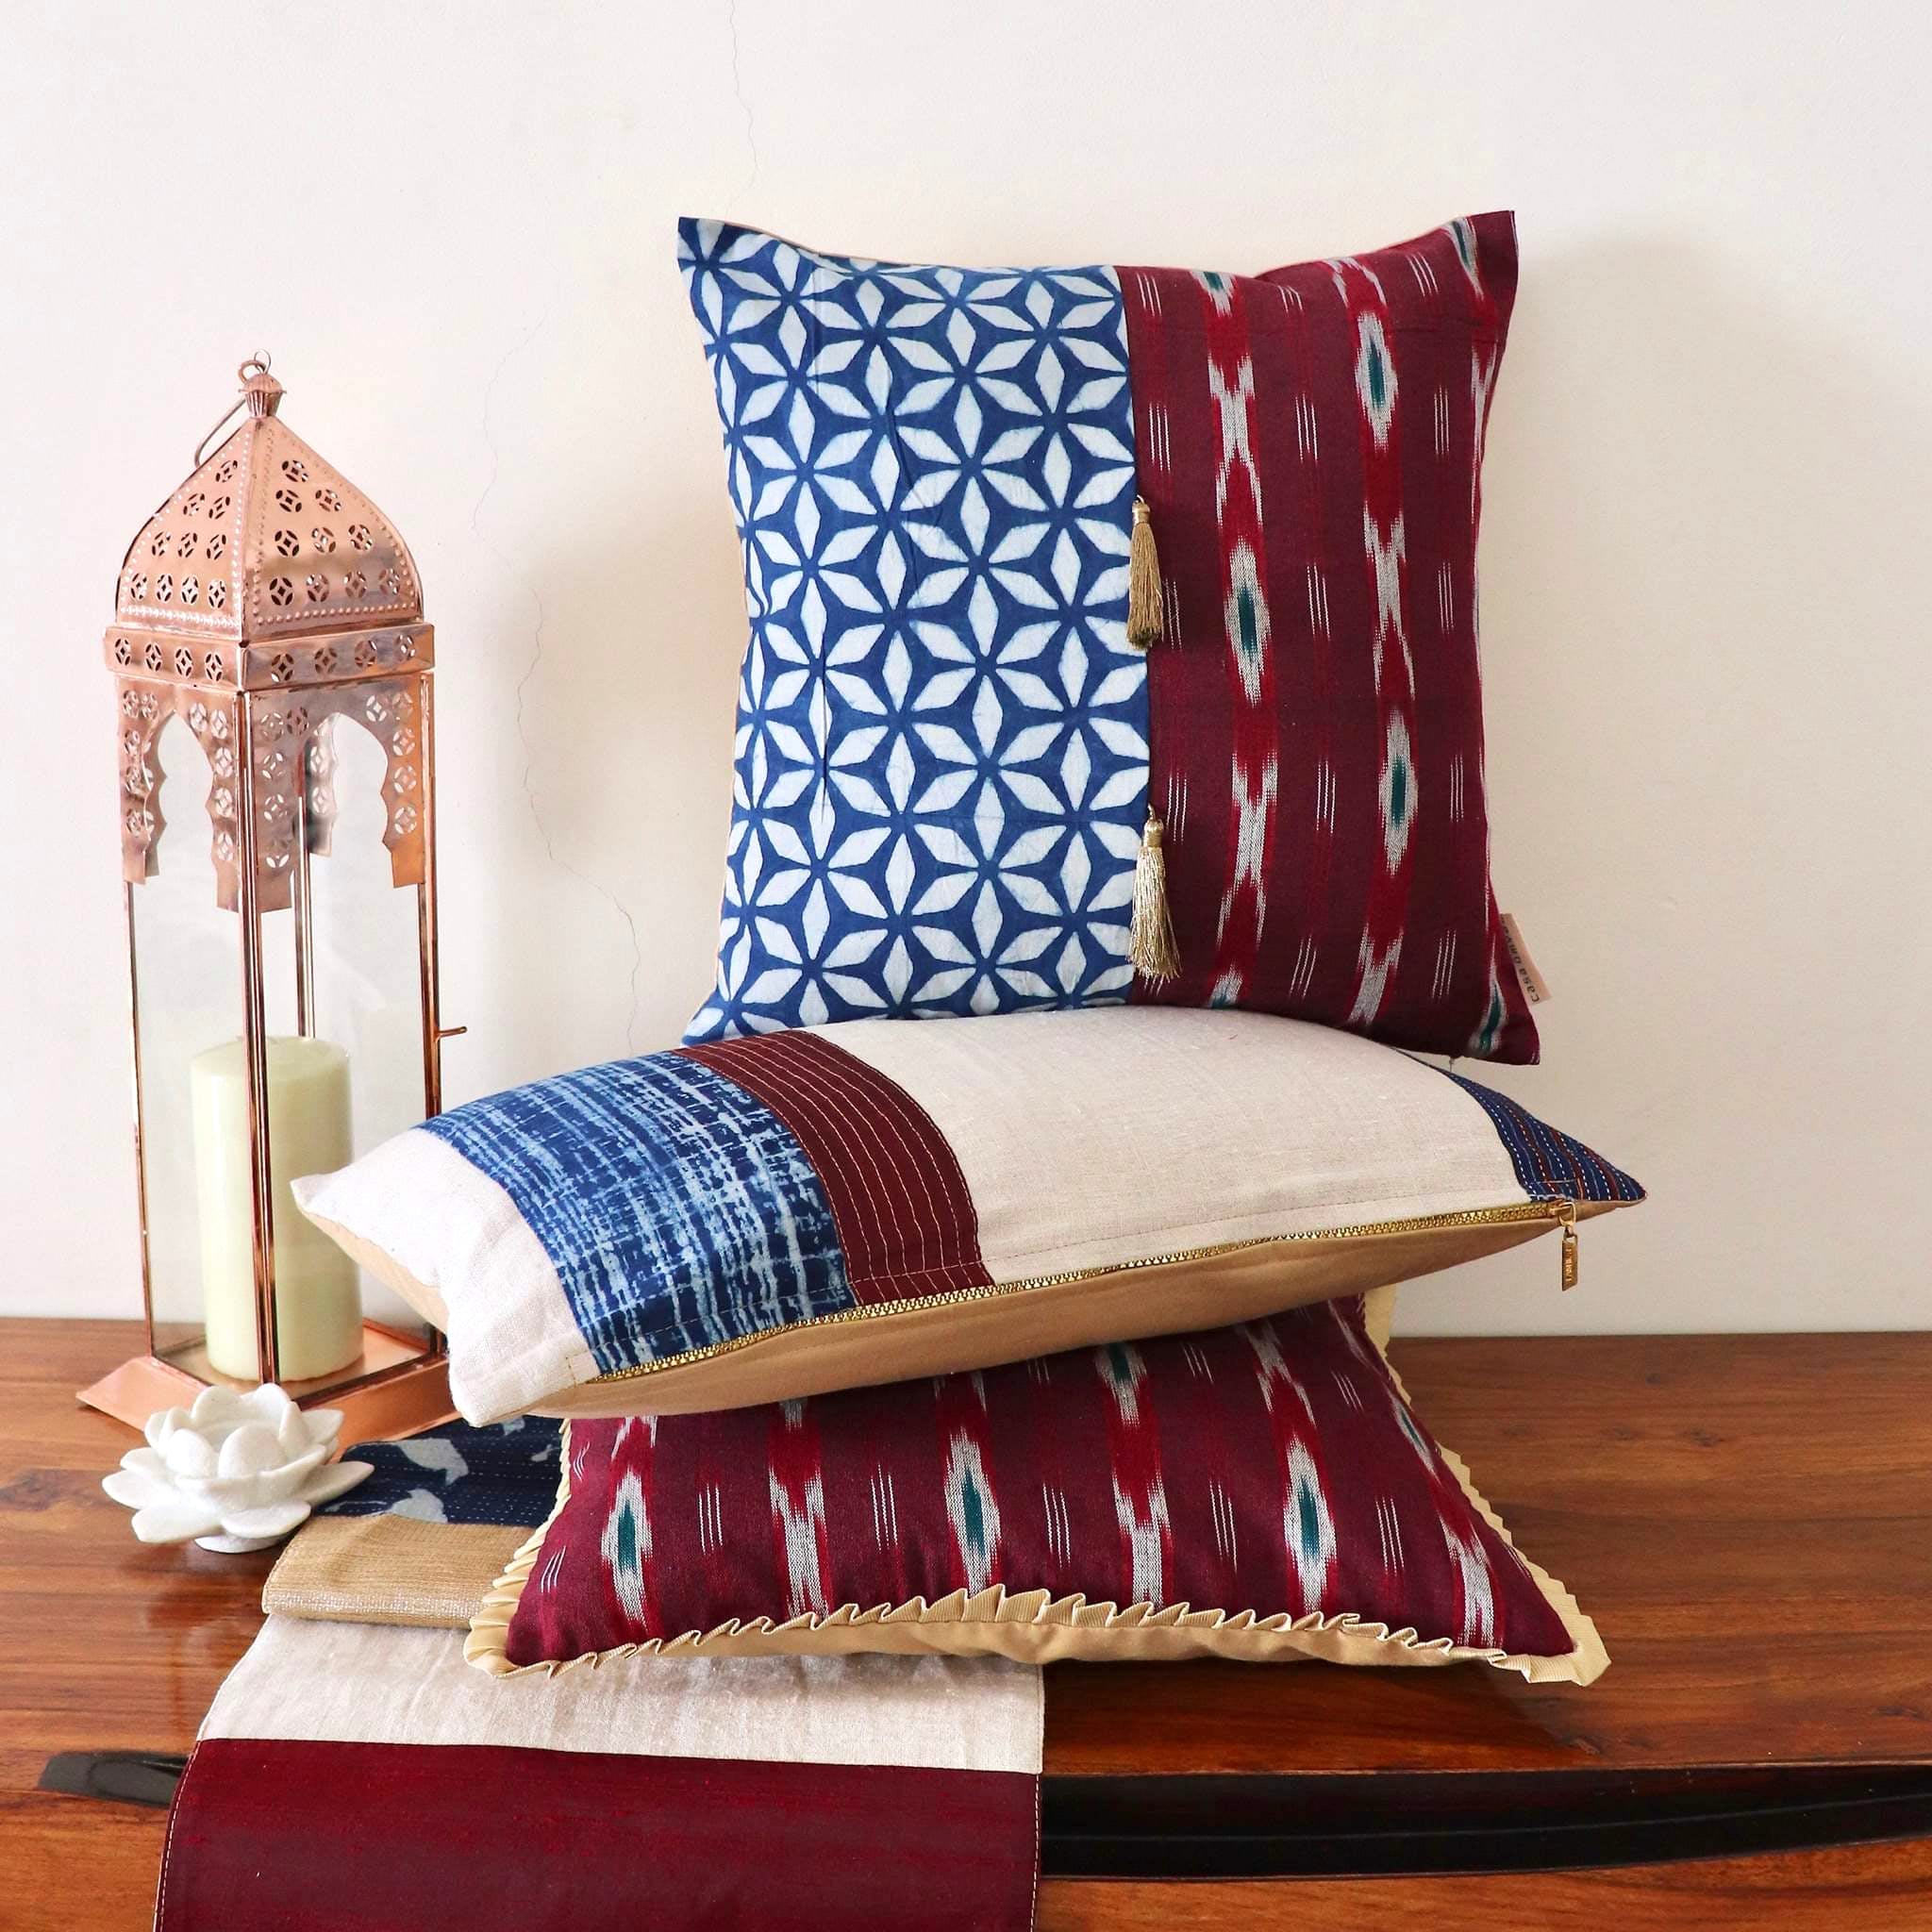 Furniture,Pillow,Cushion,Bedding,Throw pillow,Room,Linens,Textile,Duvet,Home accessories